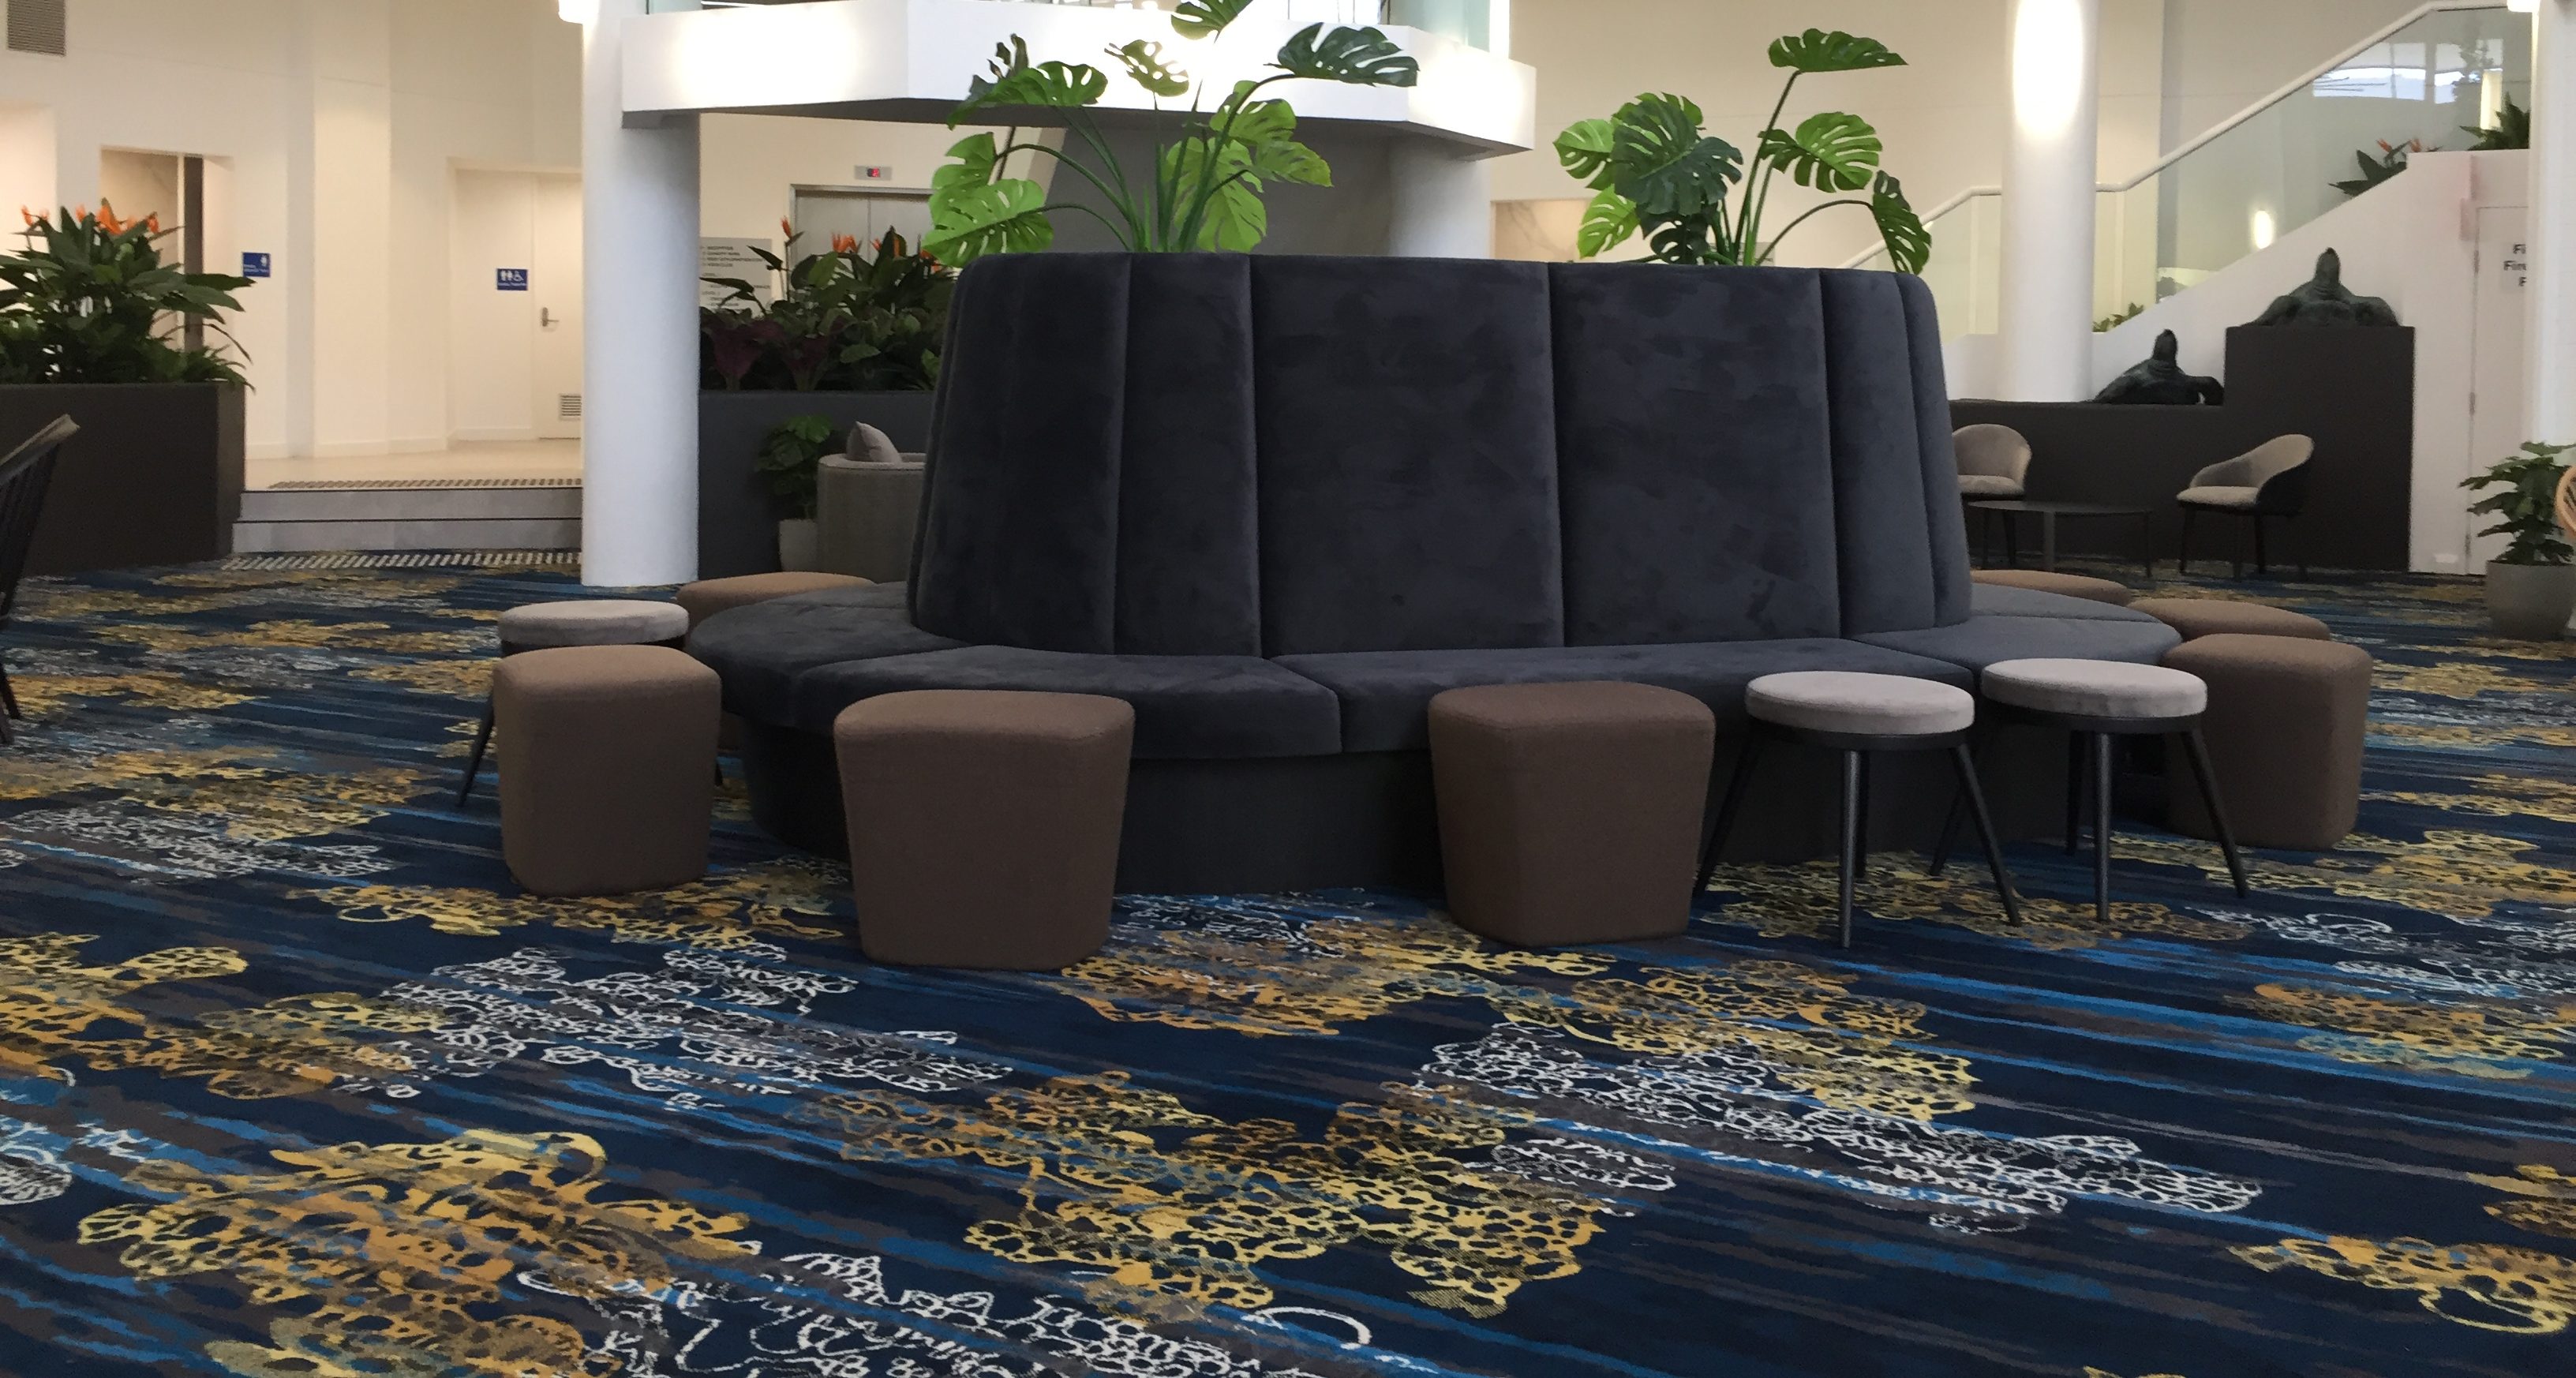 Axminster Carpet by Signature Floors Project 2019 Daydream Island Atrium – Foyer Photo image IMG_8490